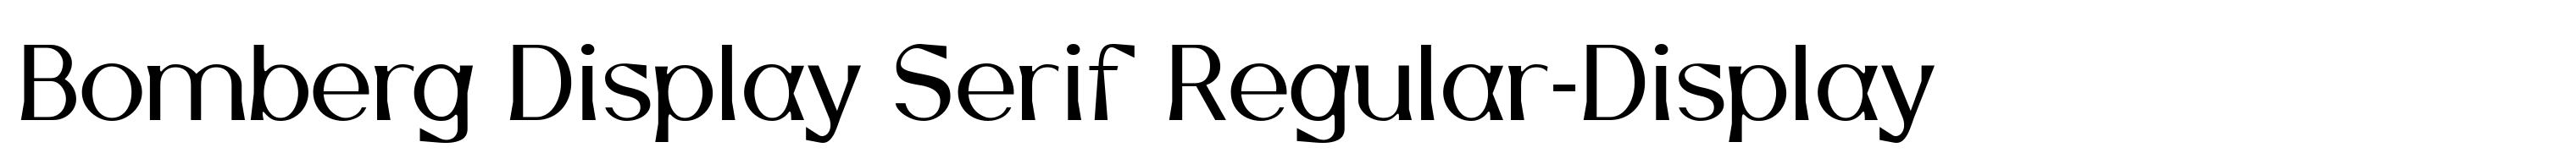 Bomberg Display Serif Regular-Display